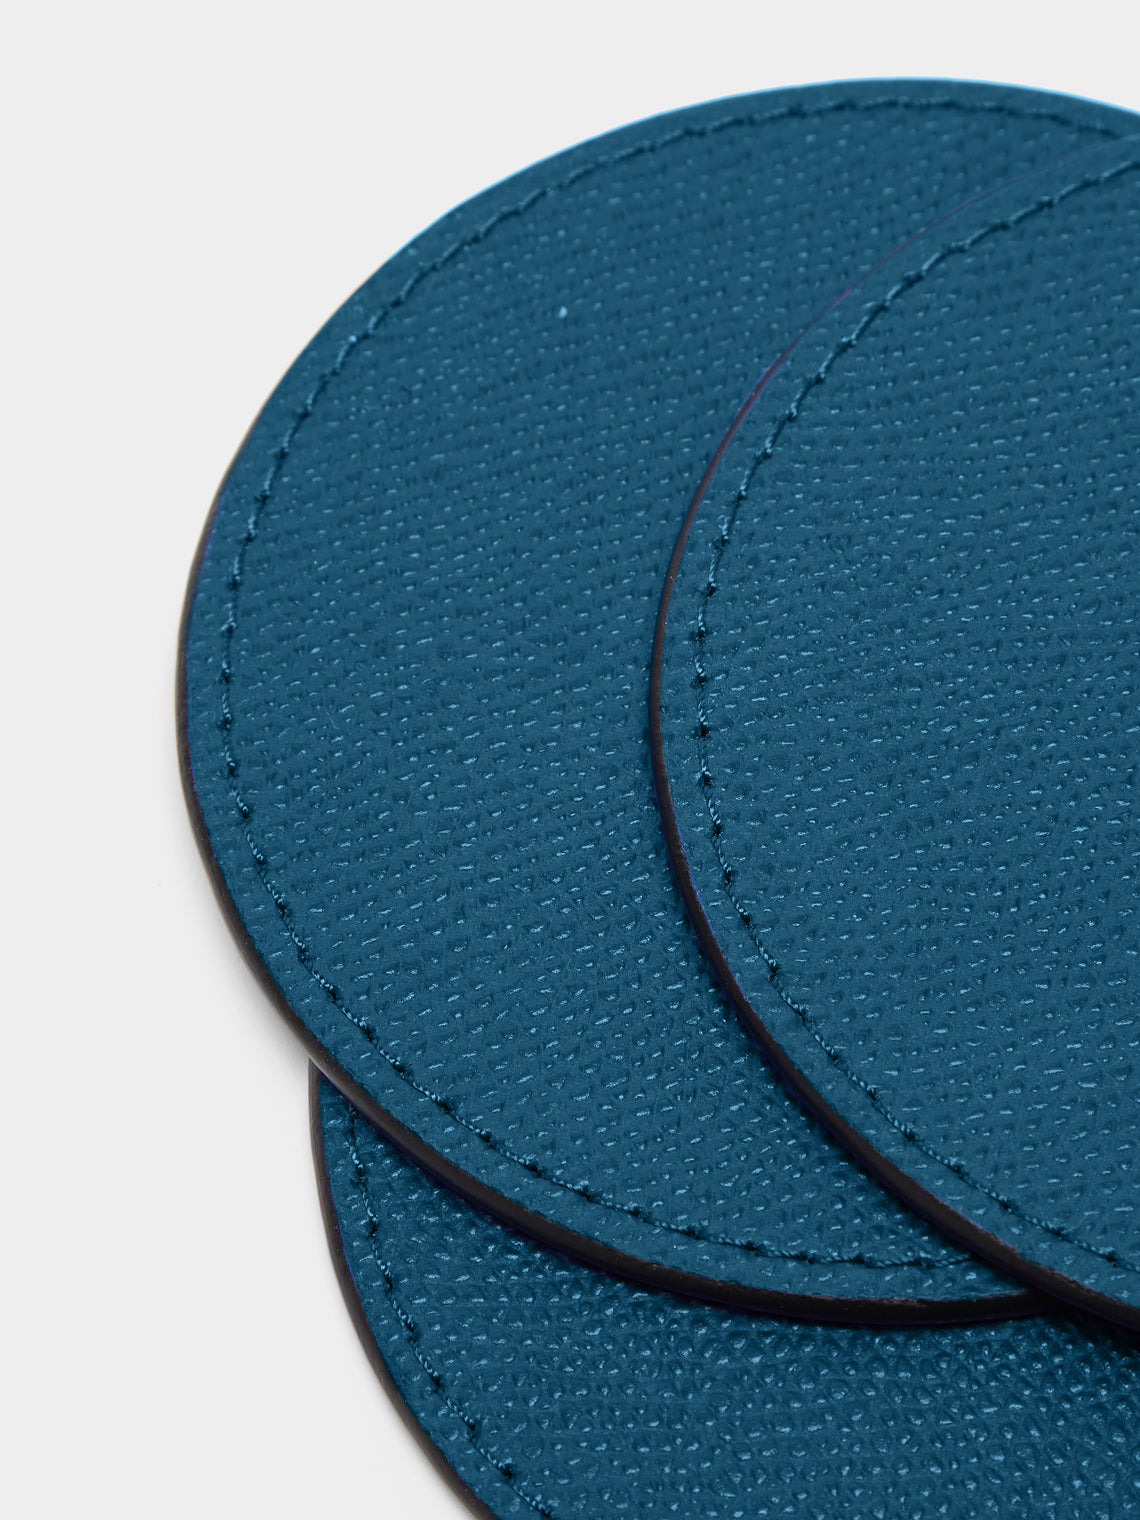 Giobagnara - David Leather Coasters (Set of 6) - Blue - ABASK